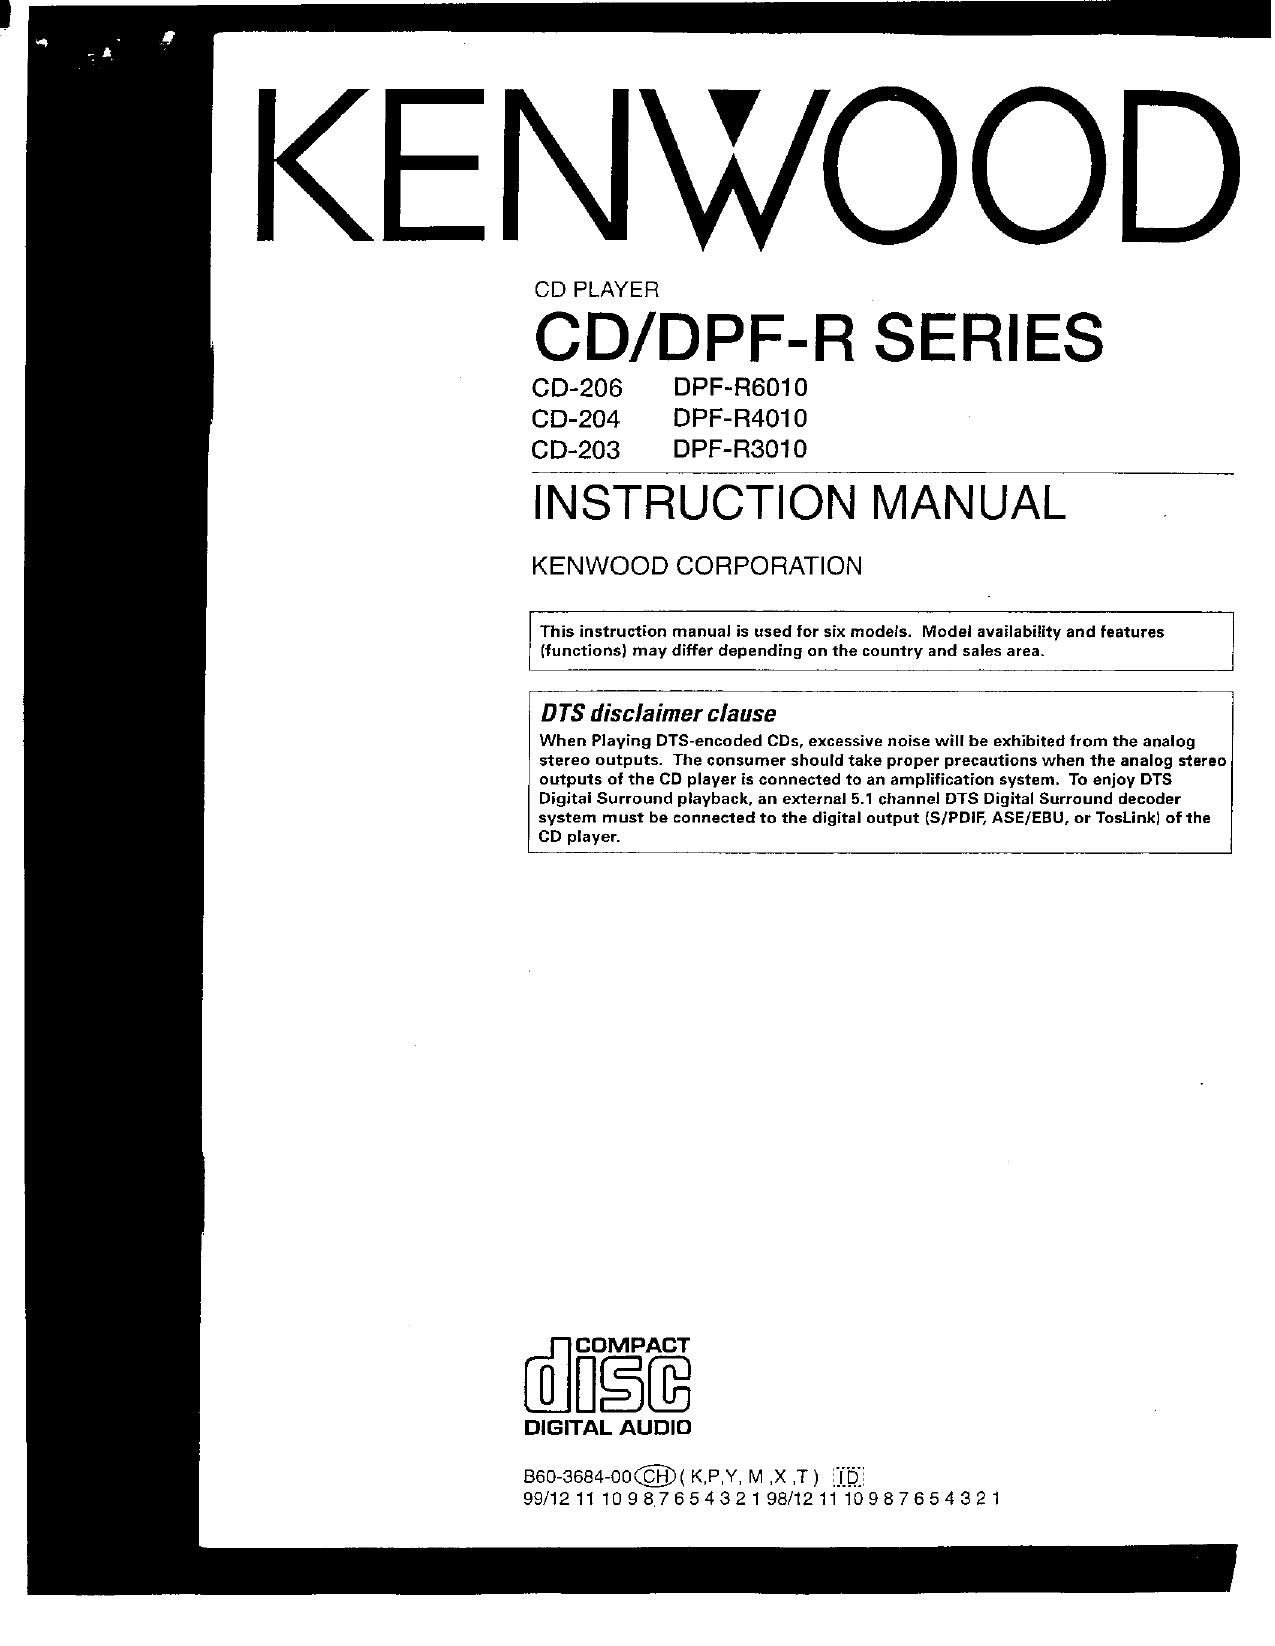 Kenwood CD 204 Owners Manual